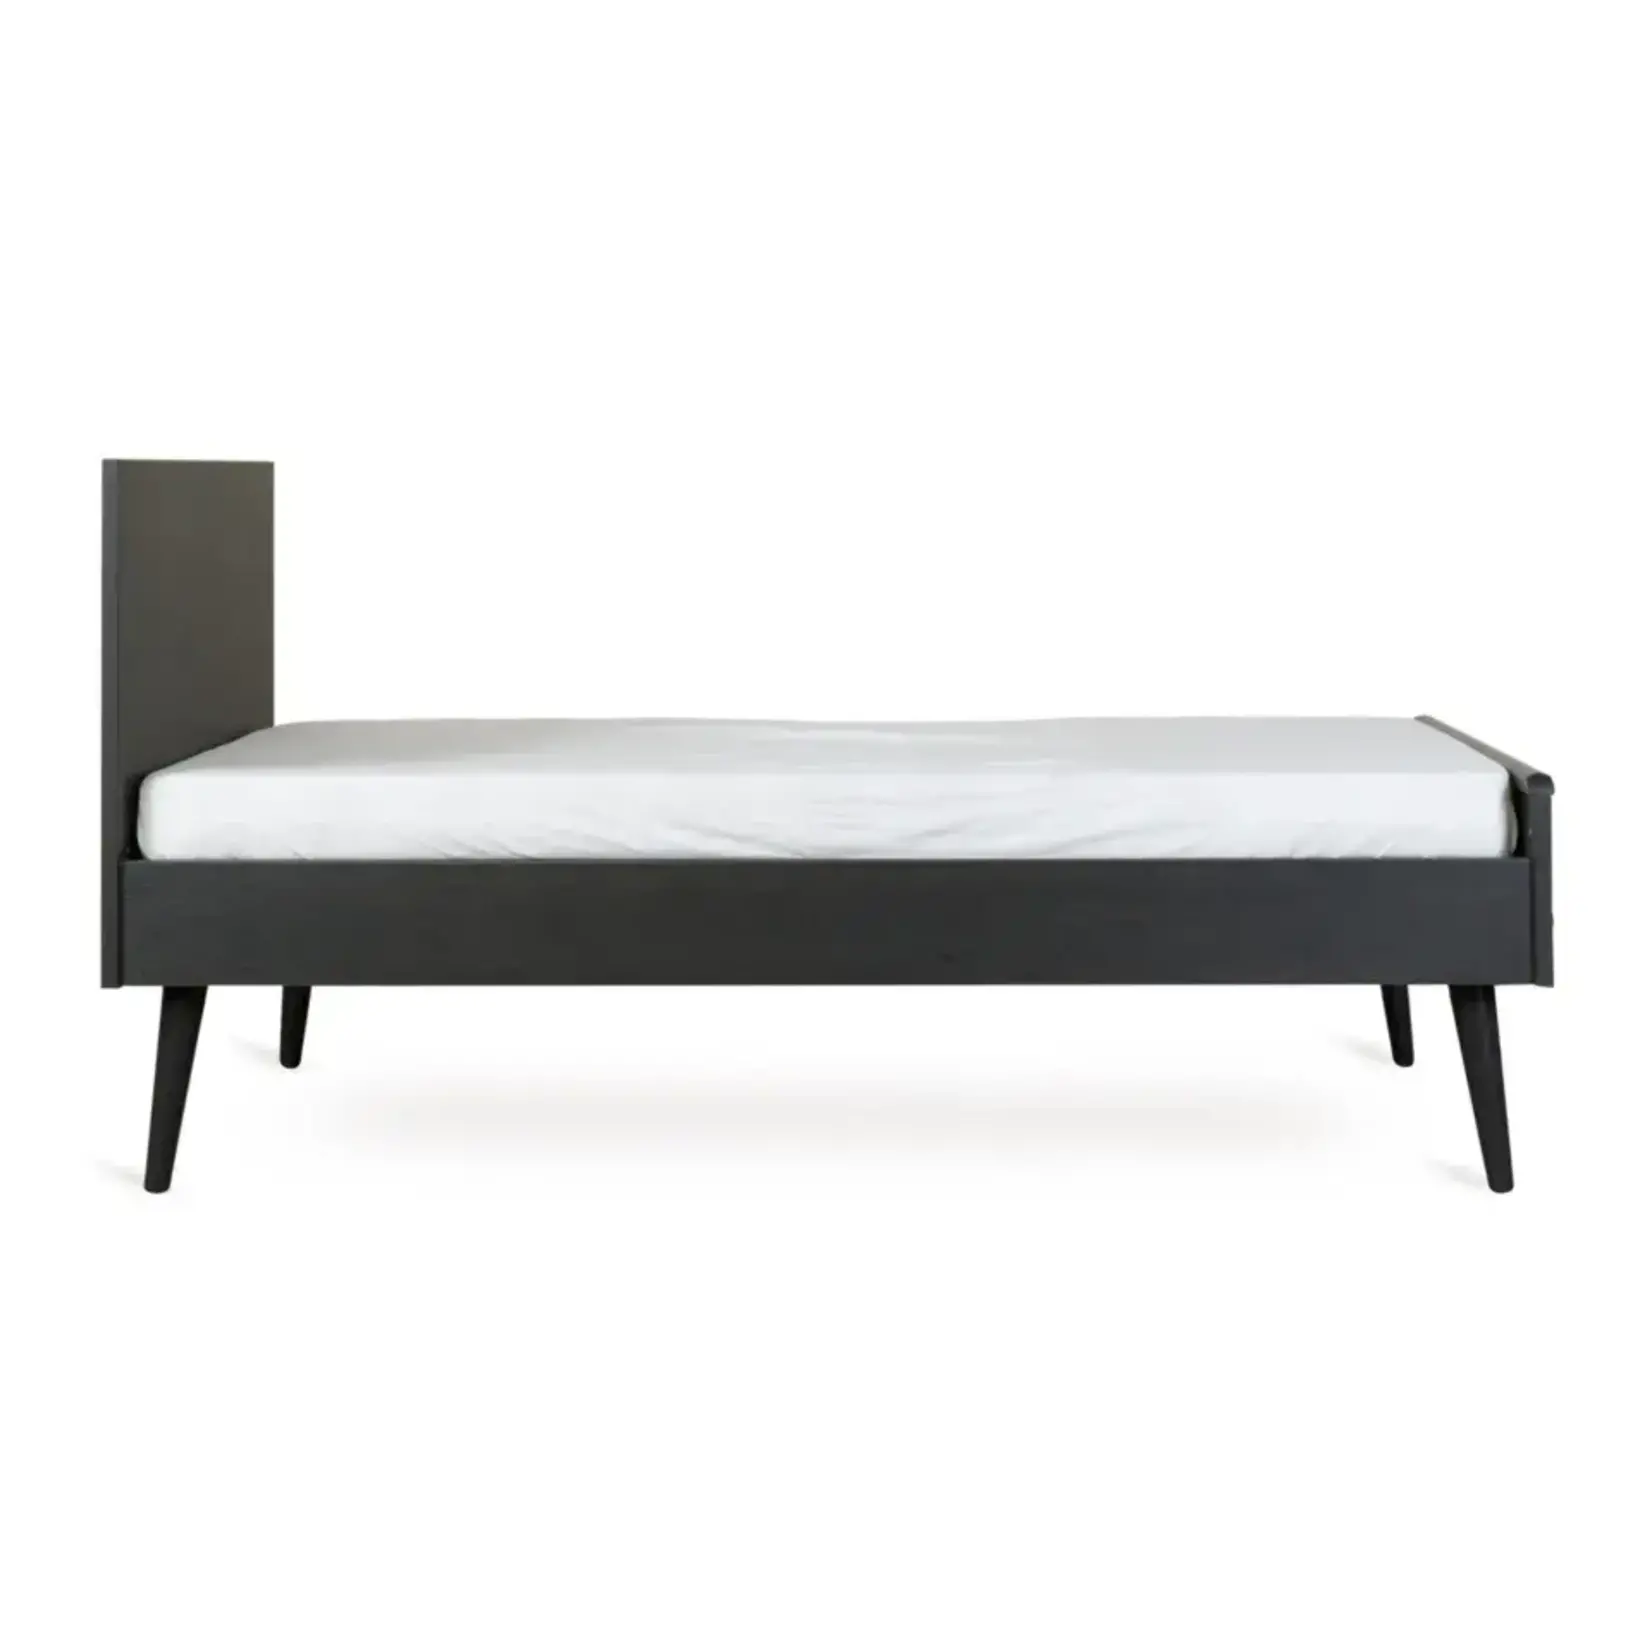 Quax Cocoon Bed - 140 x 70 cm - Eboni